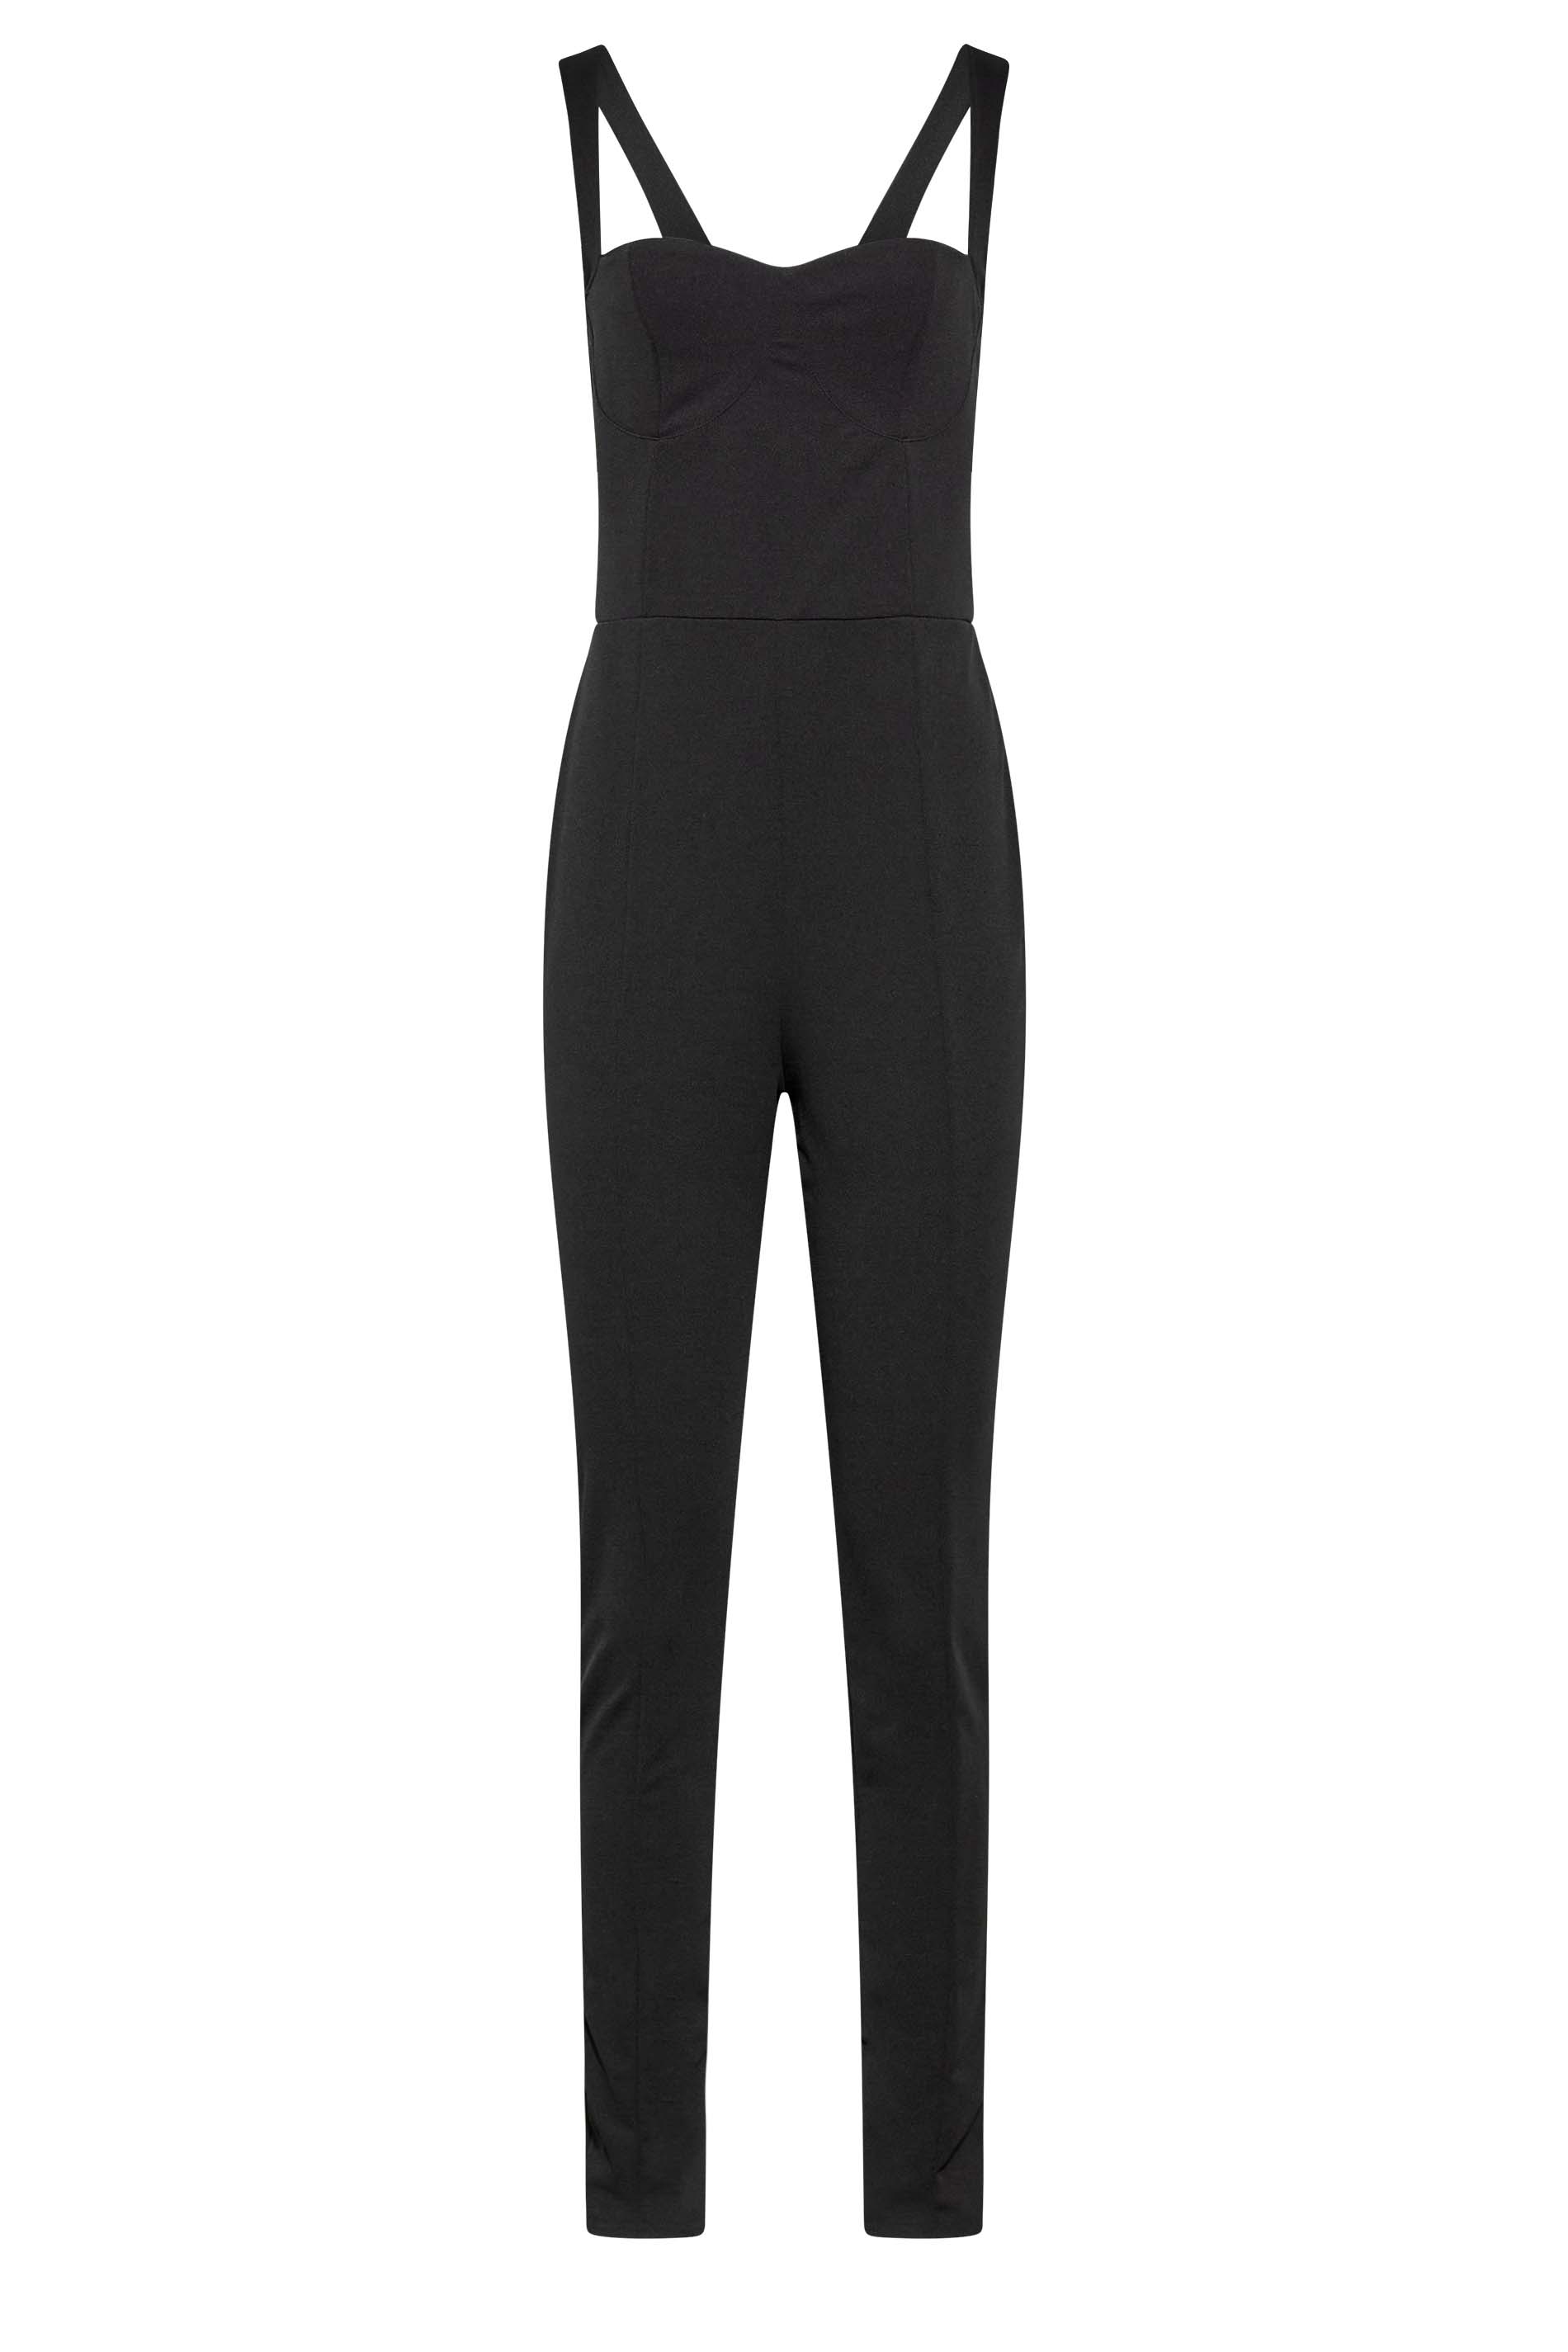 LTS Tall Women's Black Corset Detail Jumpsuit